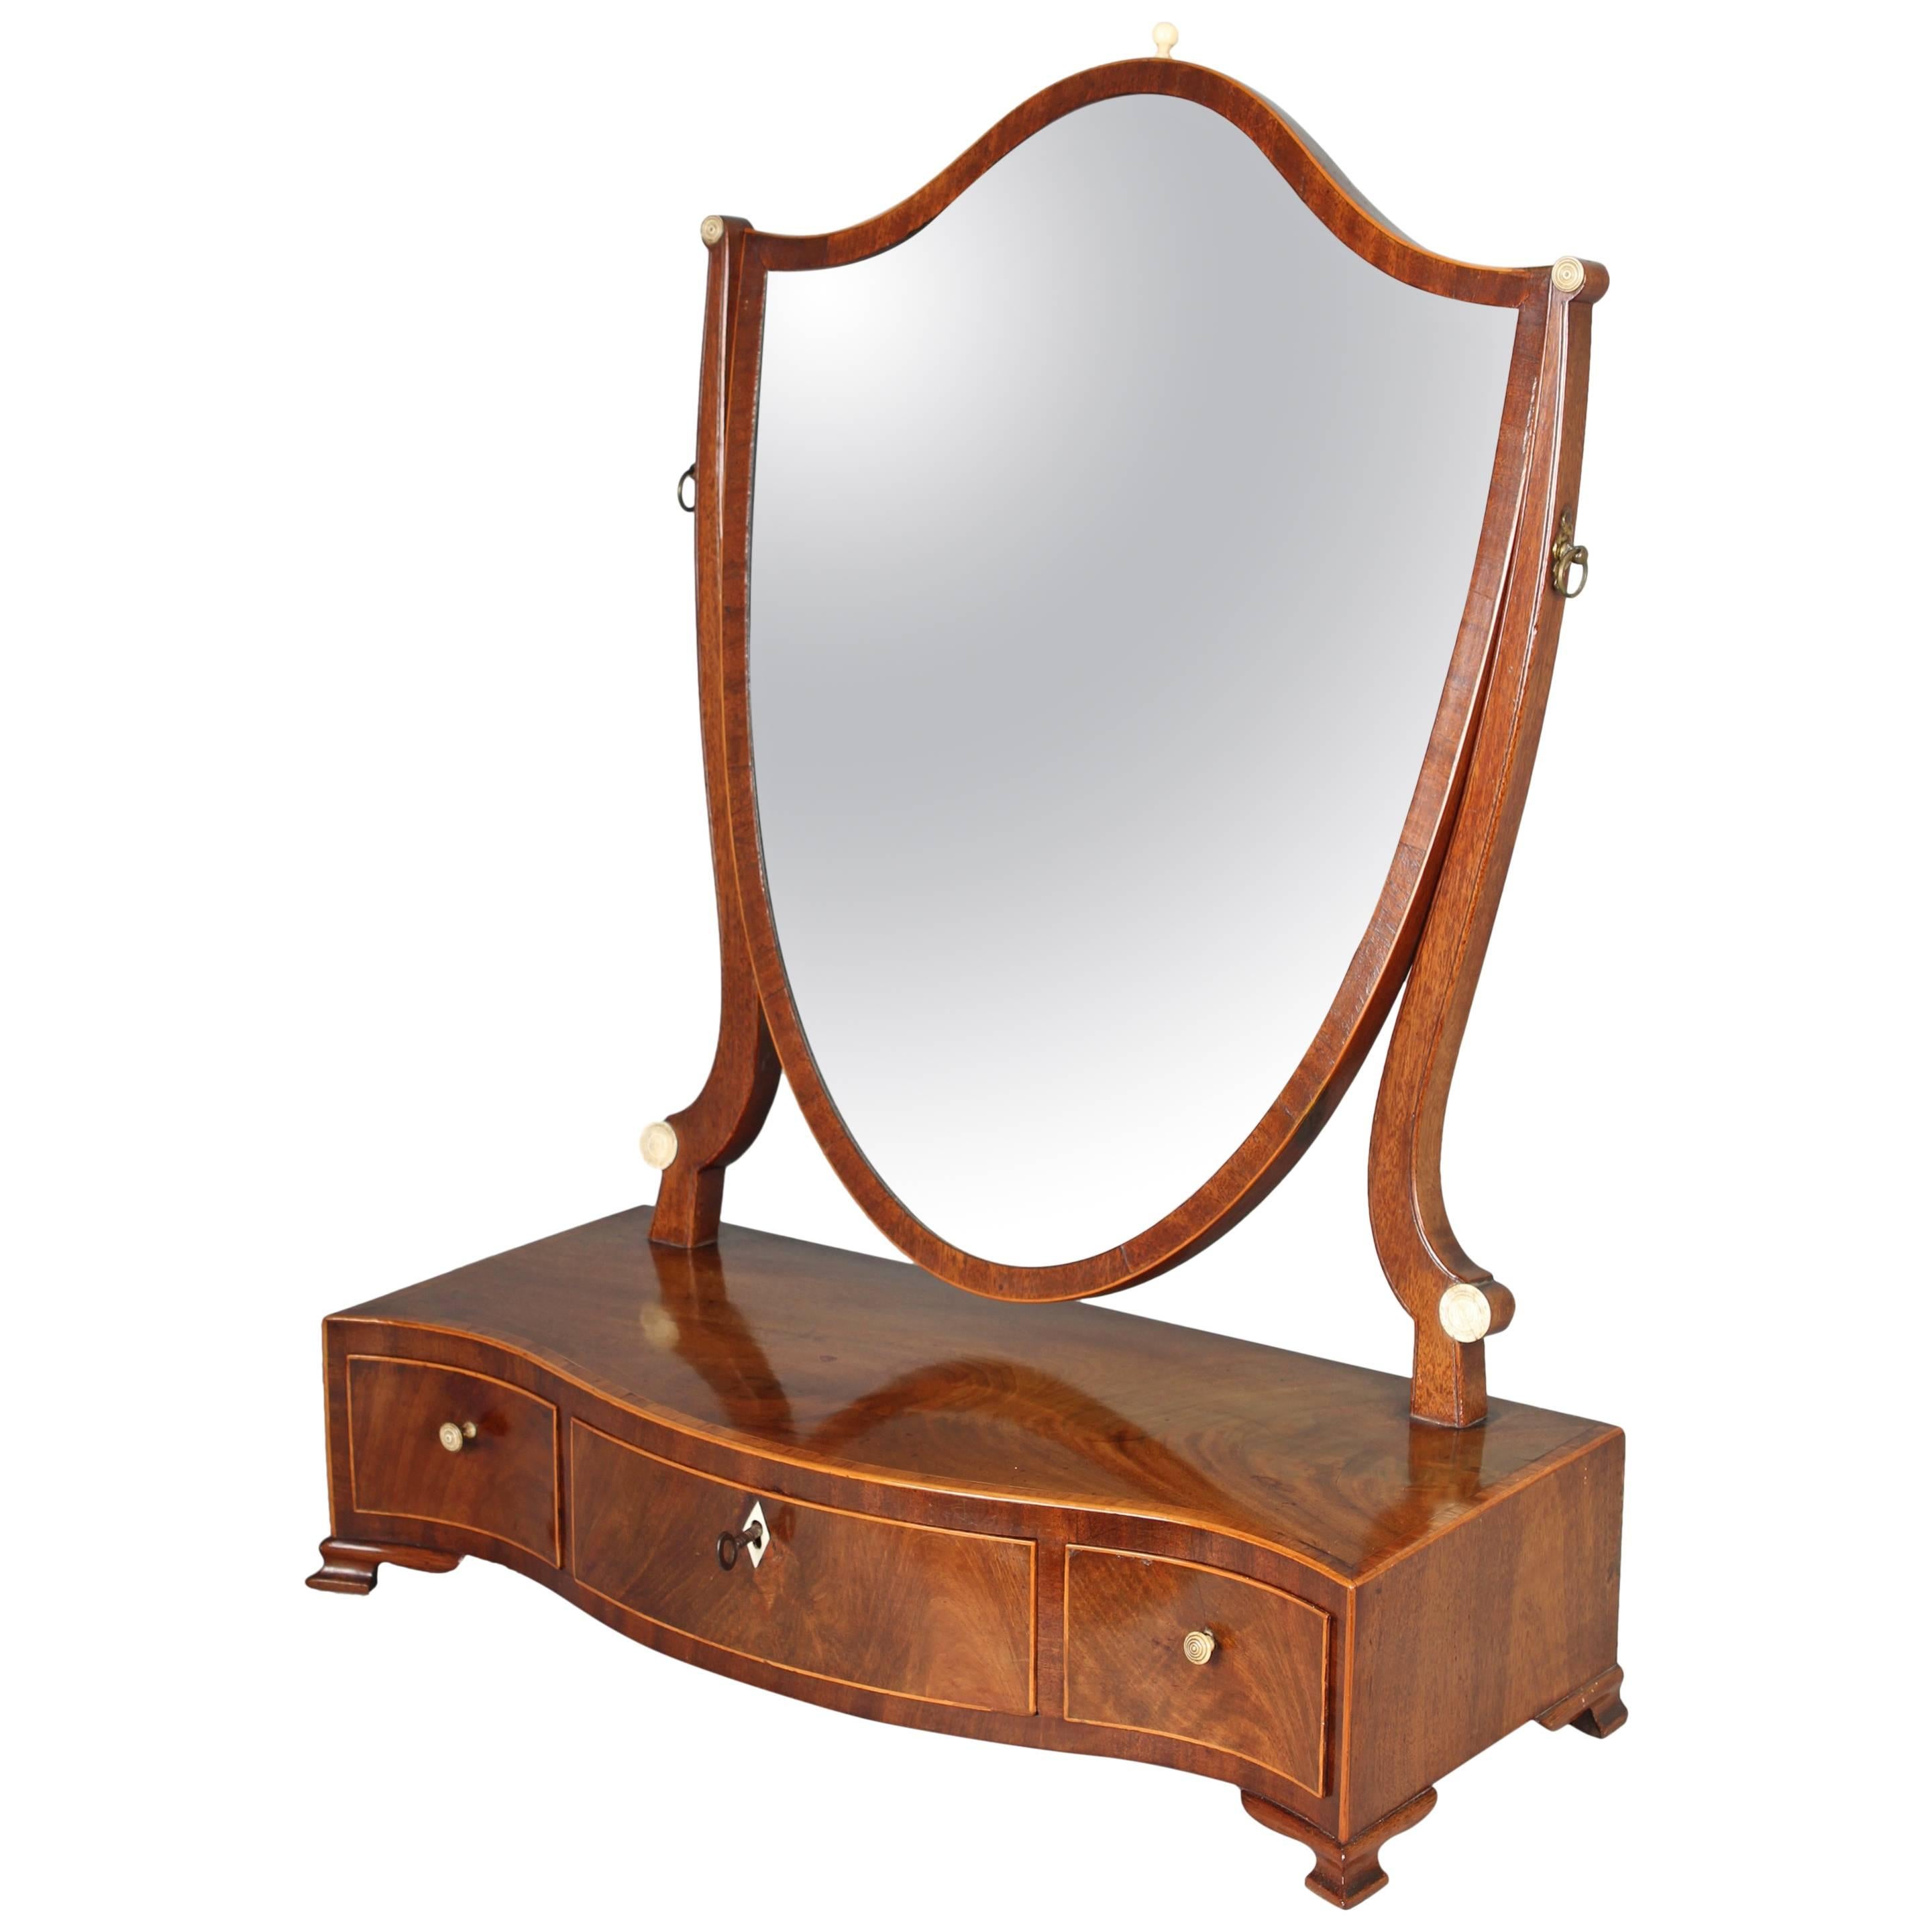 George III Period Mahogany Toilet Mirror of Classic Hepplewhite Style